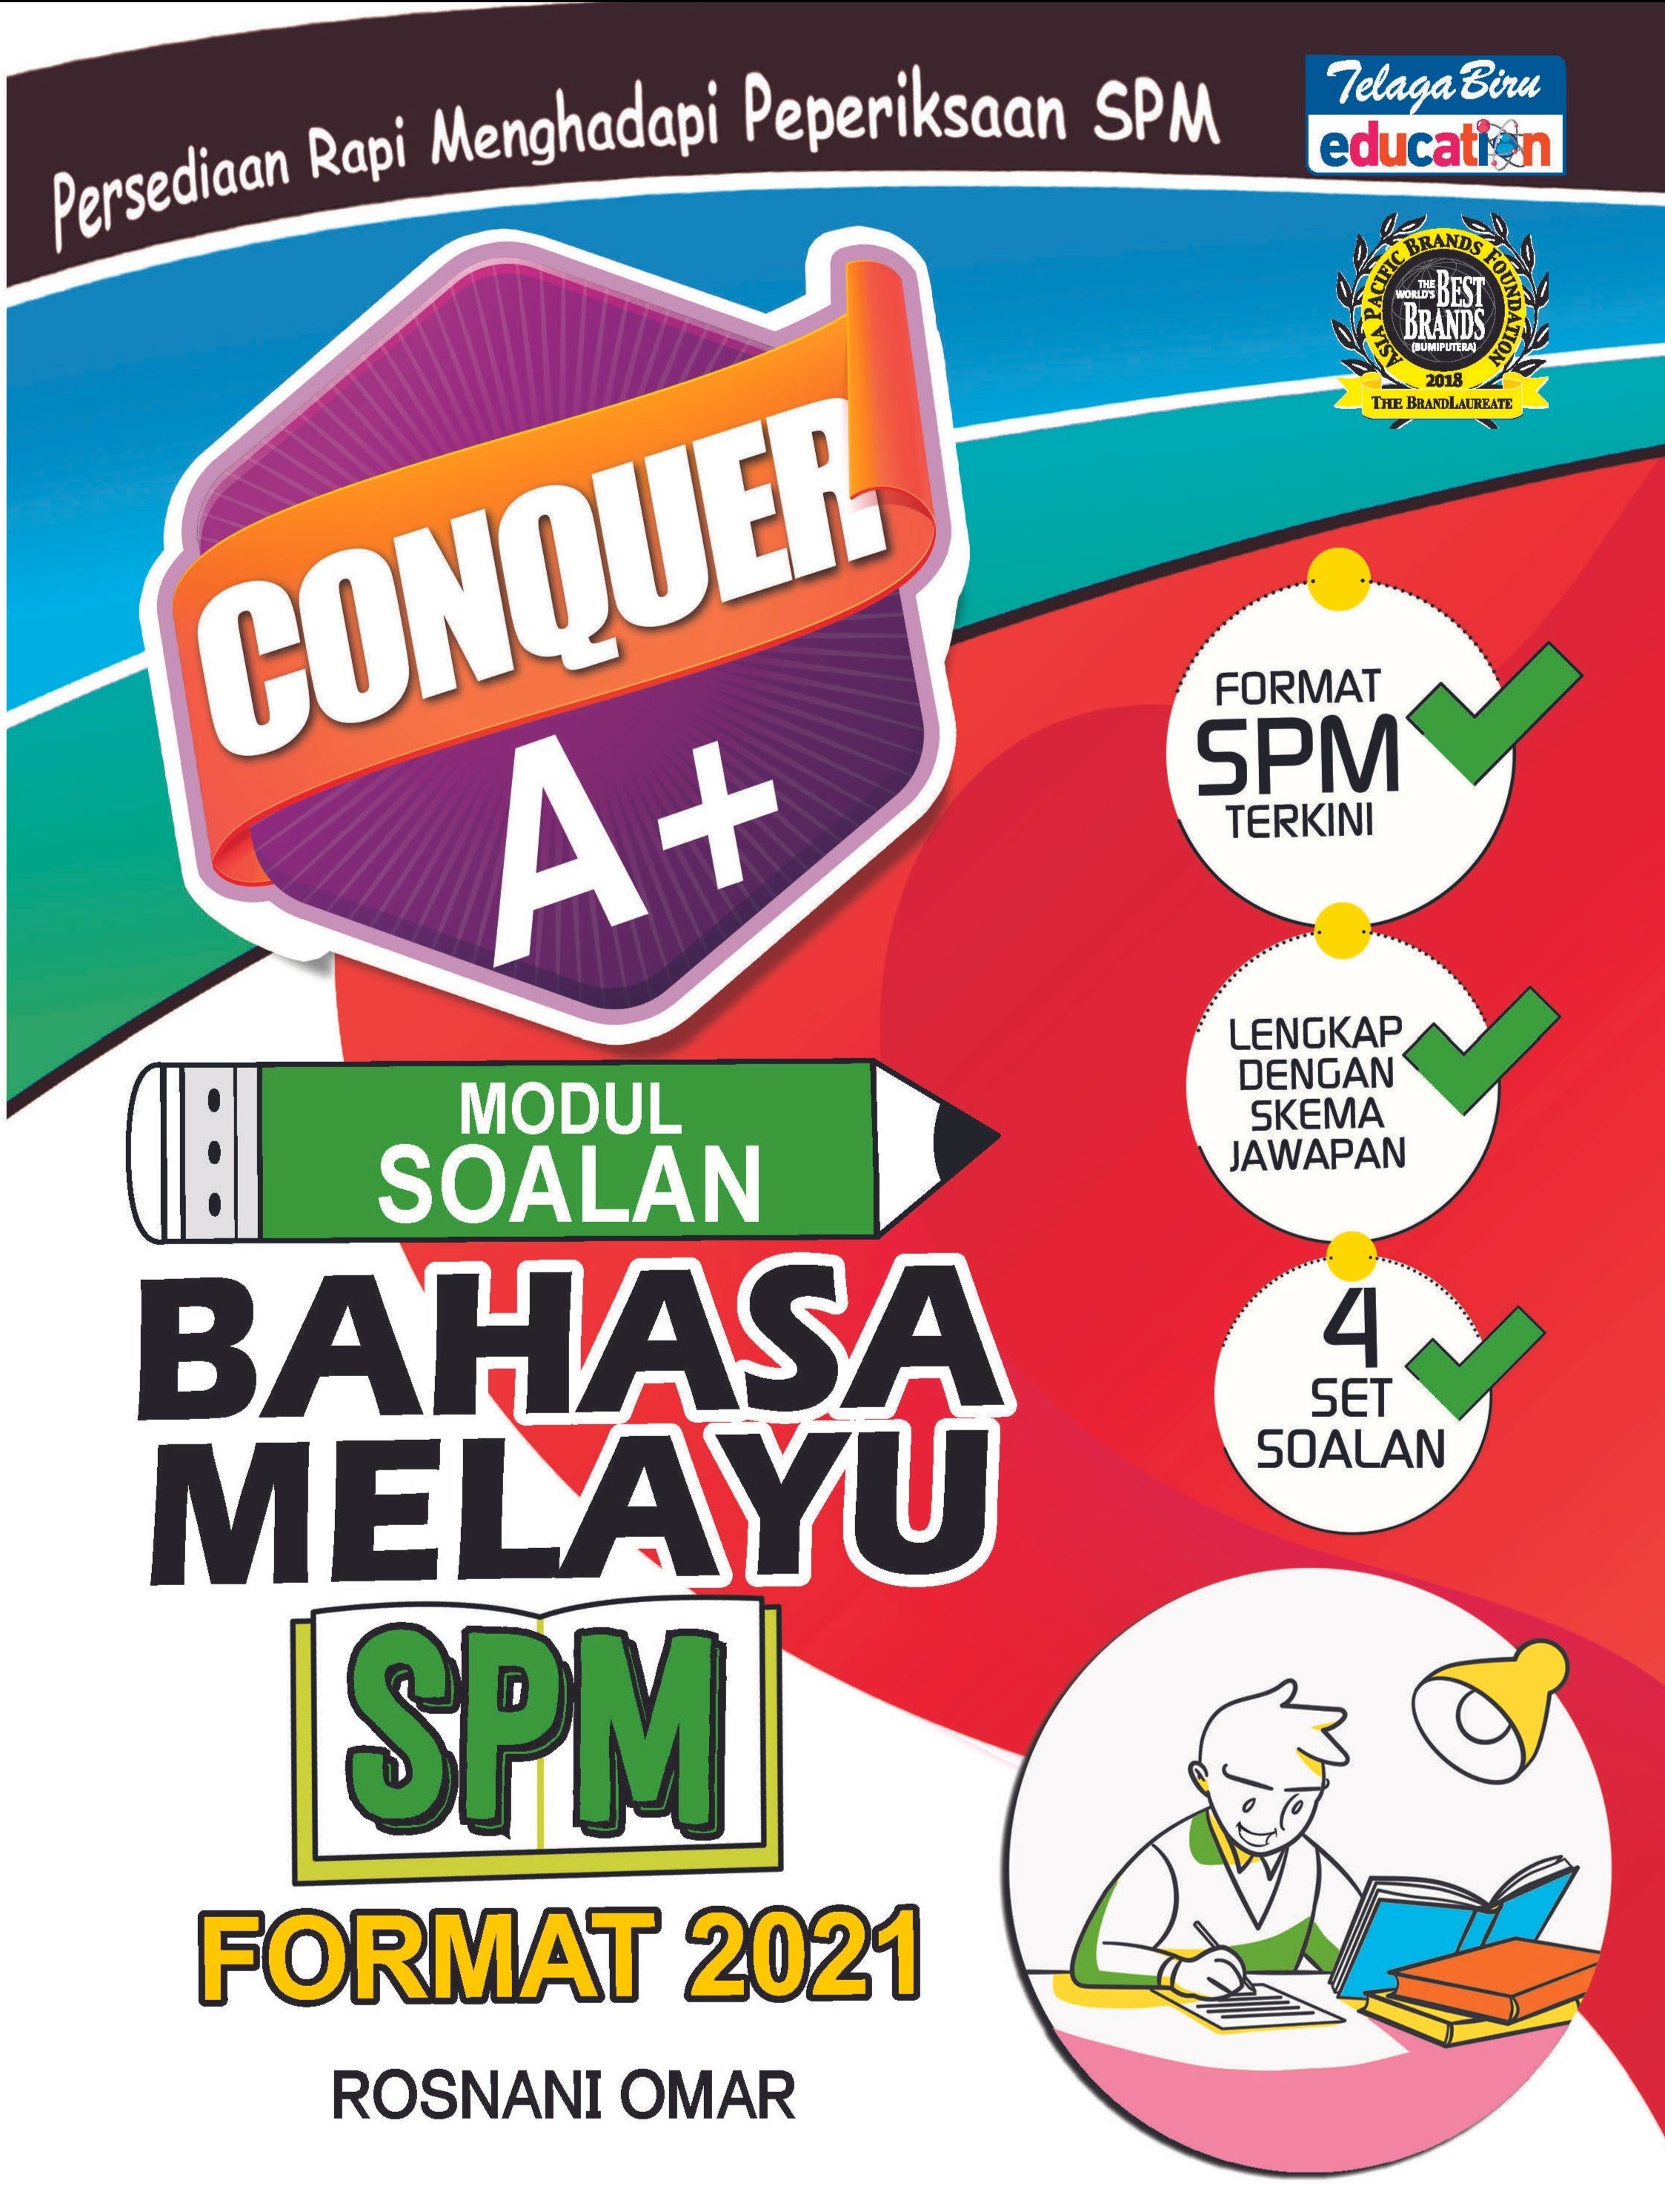 Modul Soalan Bahasa Melayu SPM Format 2021 - (TBBS1241)